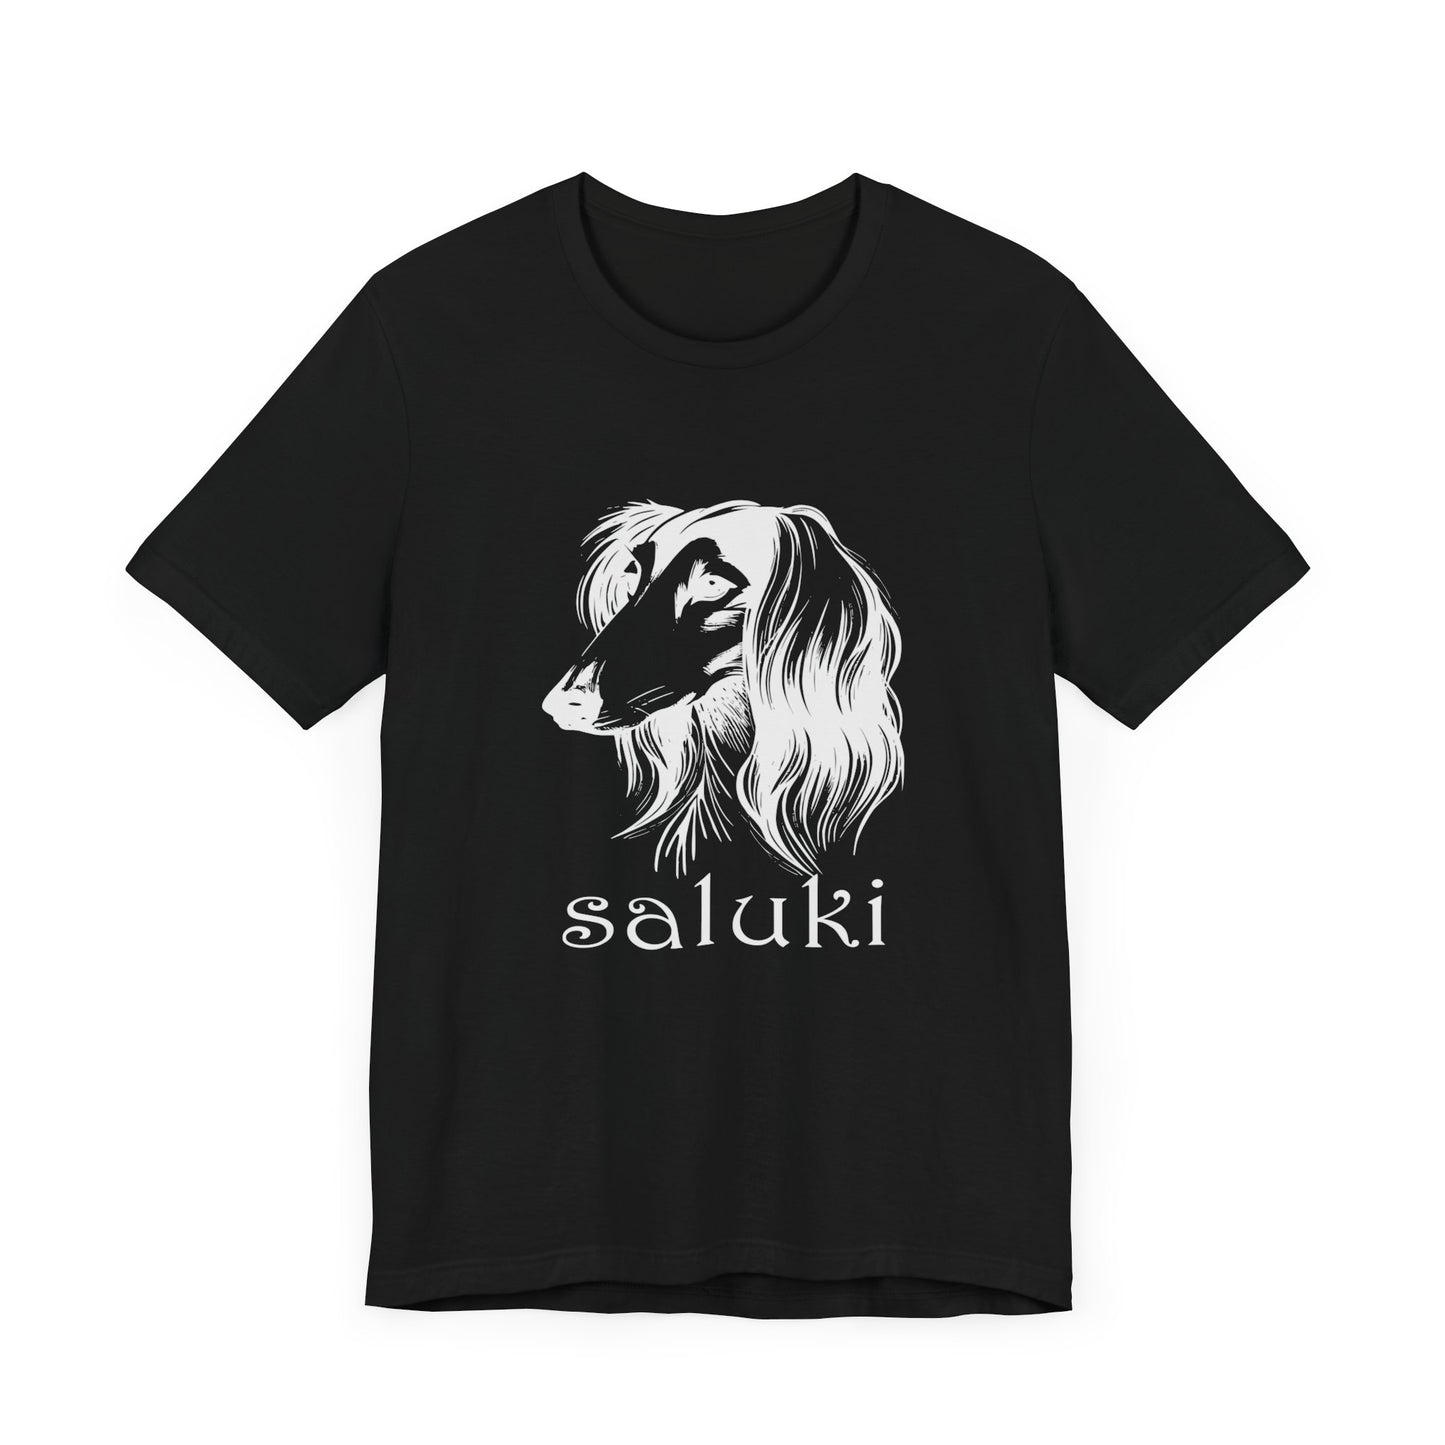 Unisex Jersey Short Sleeve Tee featuring a Saluki dog breed head study portrait - Style 2